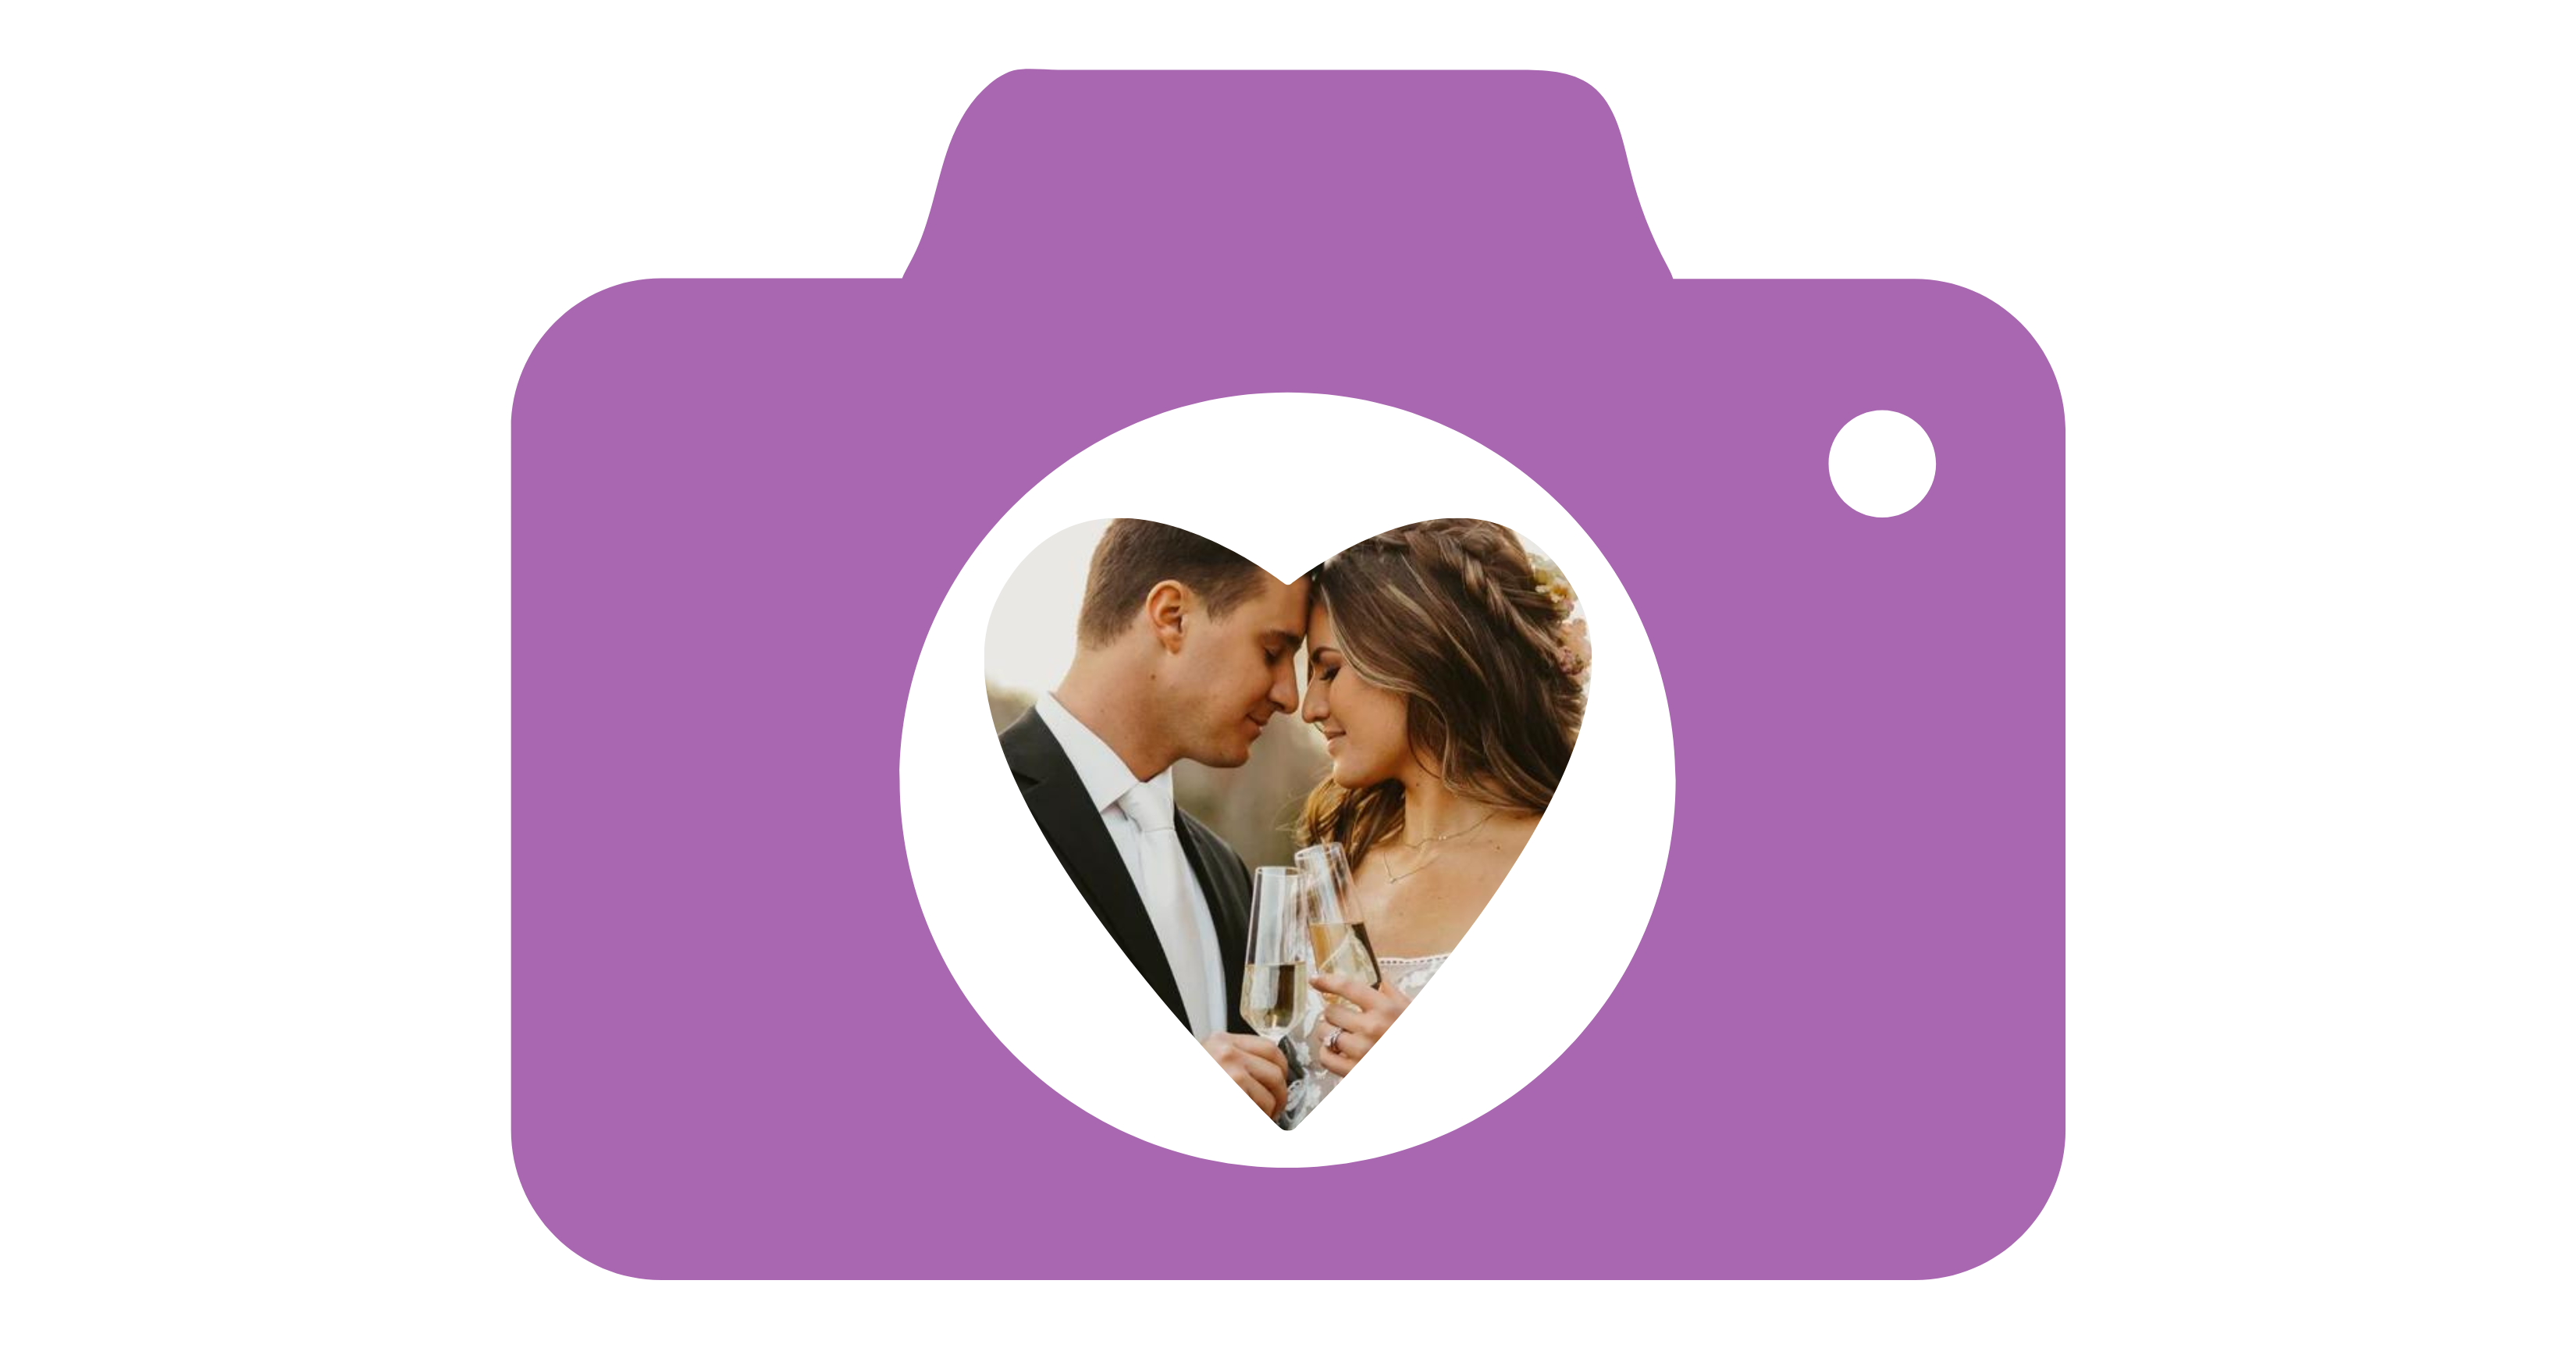 11 Unique Wedding Photos You’ll Want to Capture